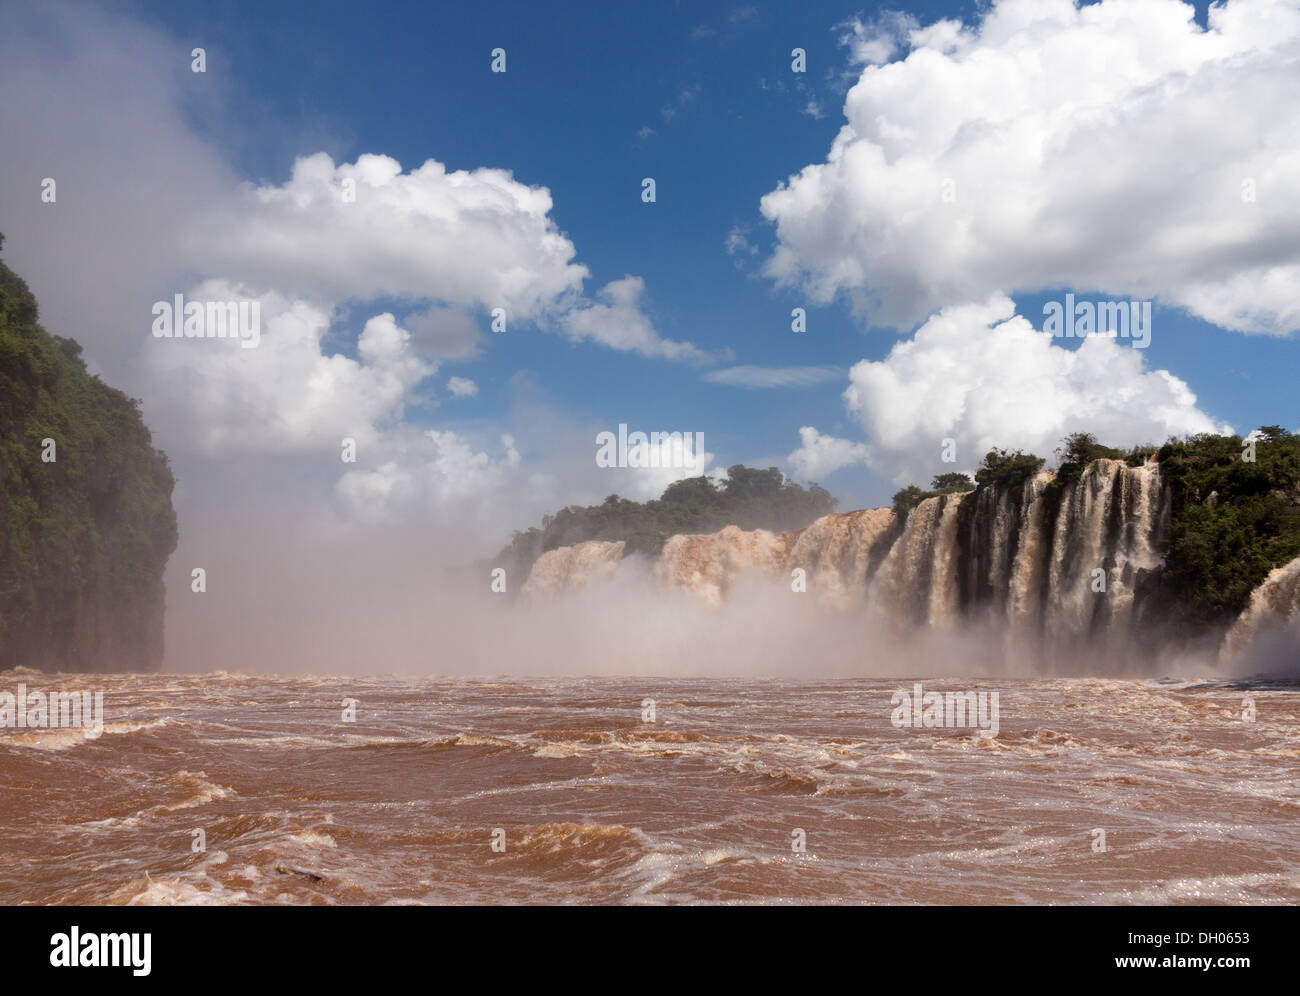 Flood swollen river leading to famous Iguazu Falls Brazil Argentina border waterfall Stock Photo